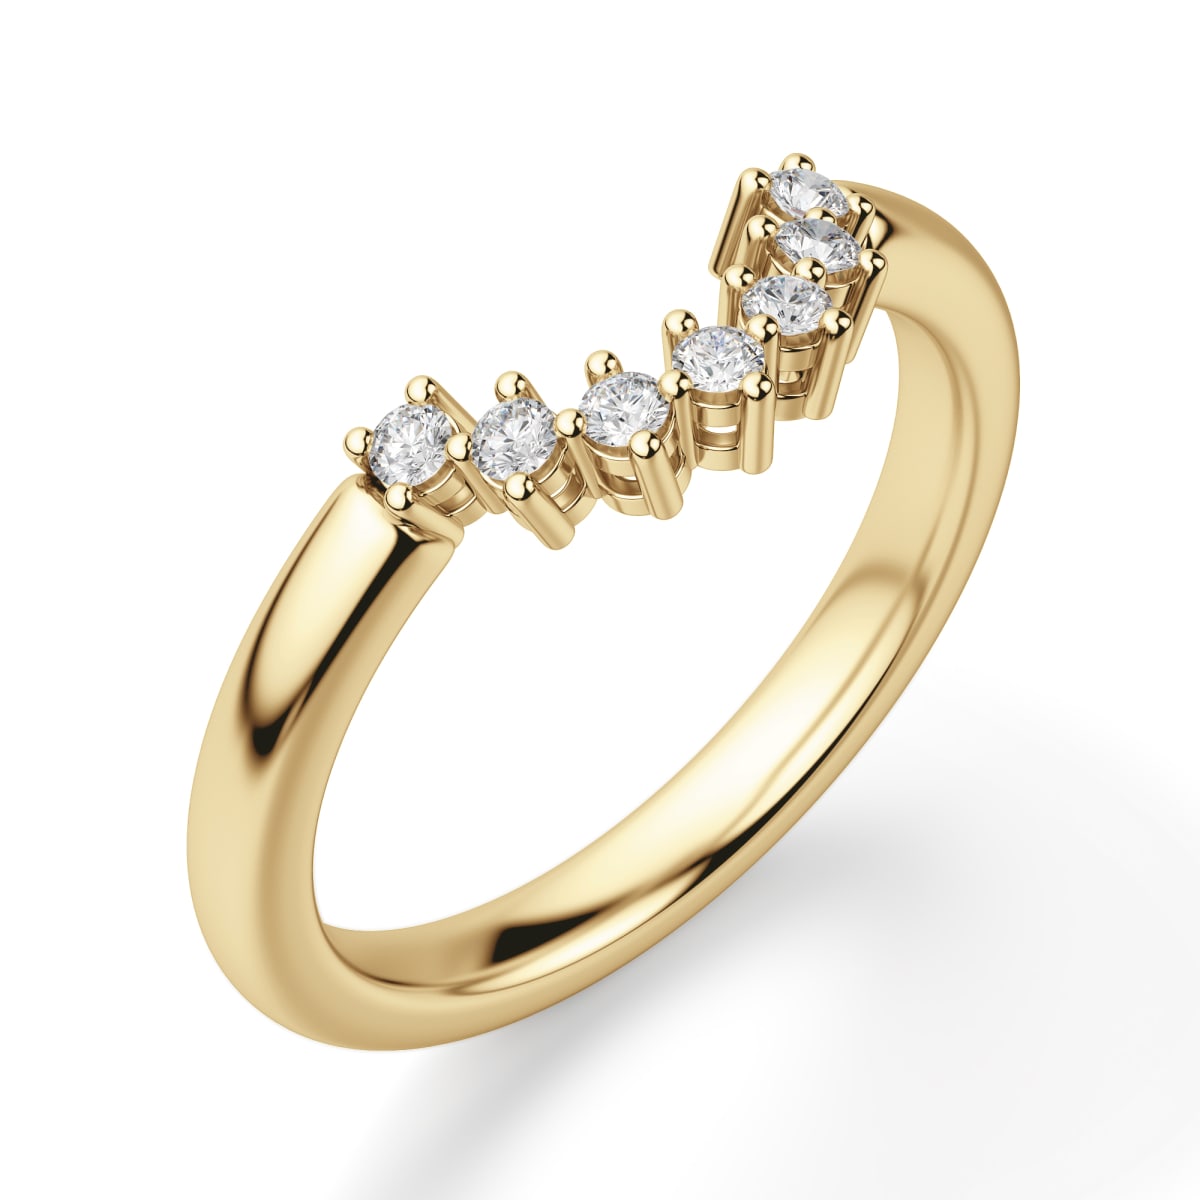 Gallant Wedding Band, Ring Size 7, 14K Yellow Gold, Moissanite